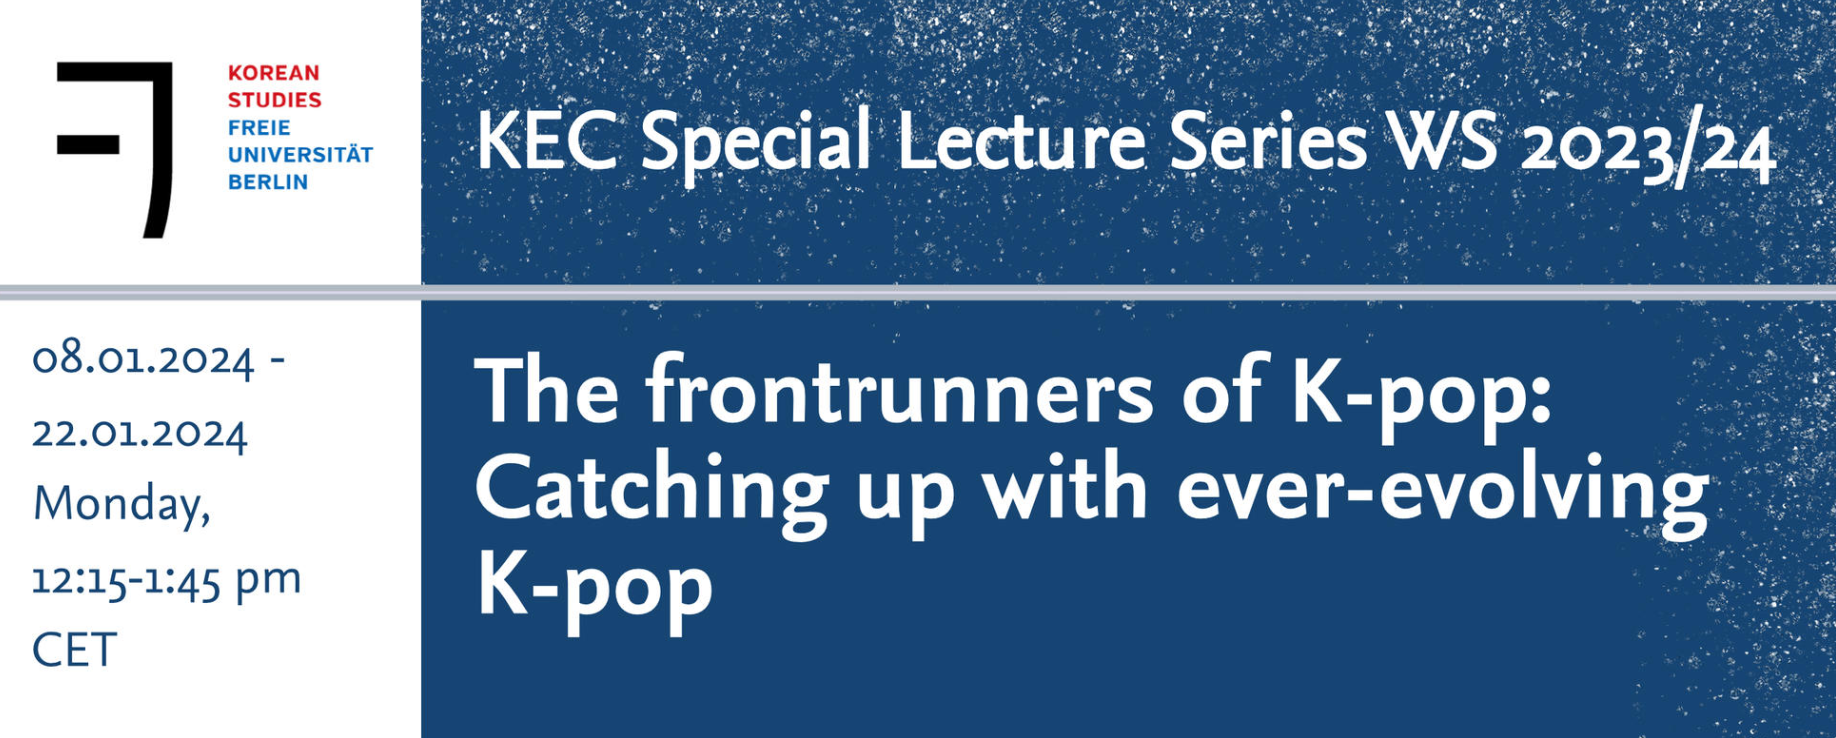 [KDIS-FUB IKS] KEC Special Lecture Series